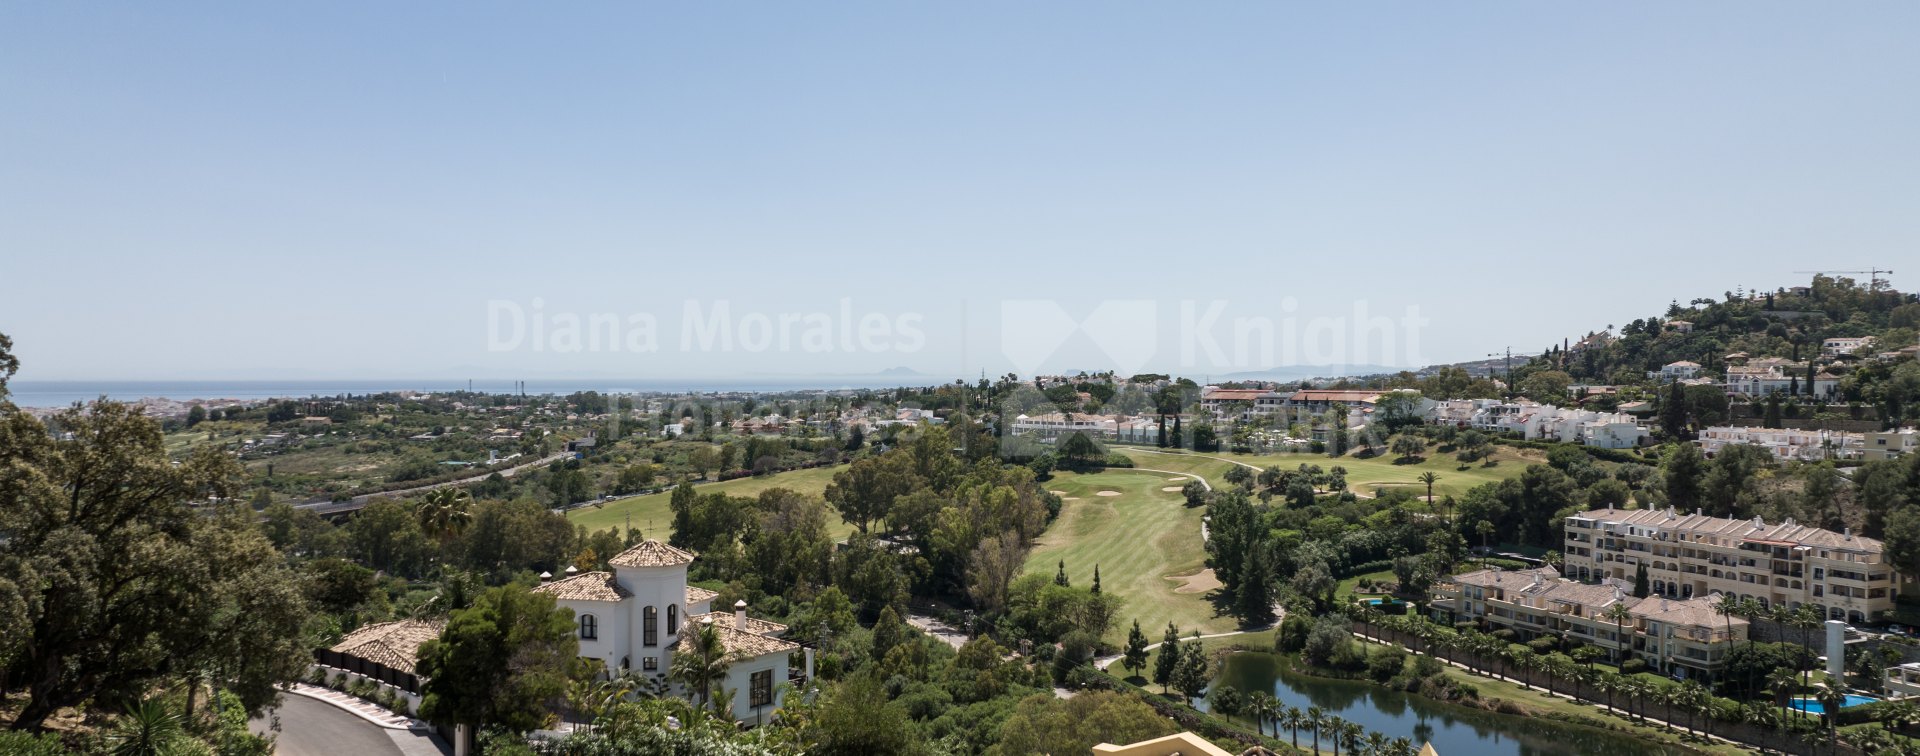 Vega del Colorado, Classic villa with character and panoramic views